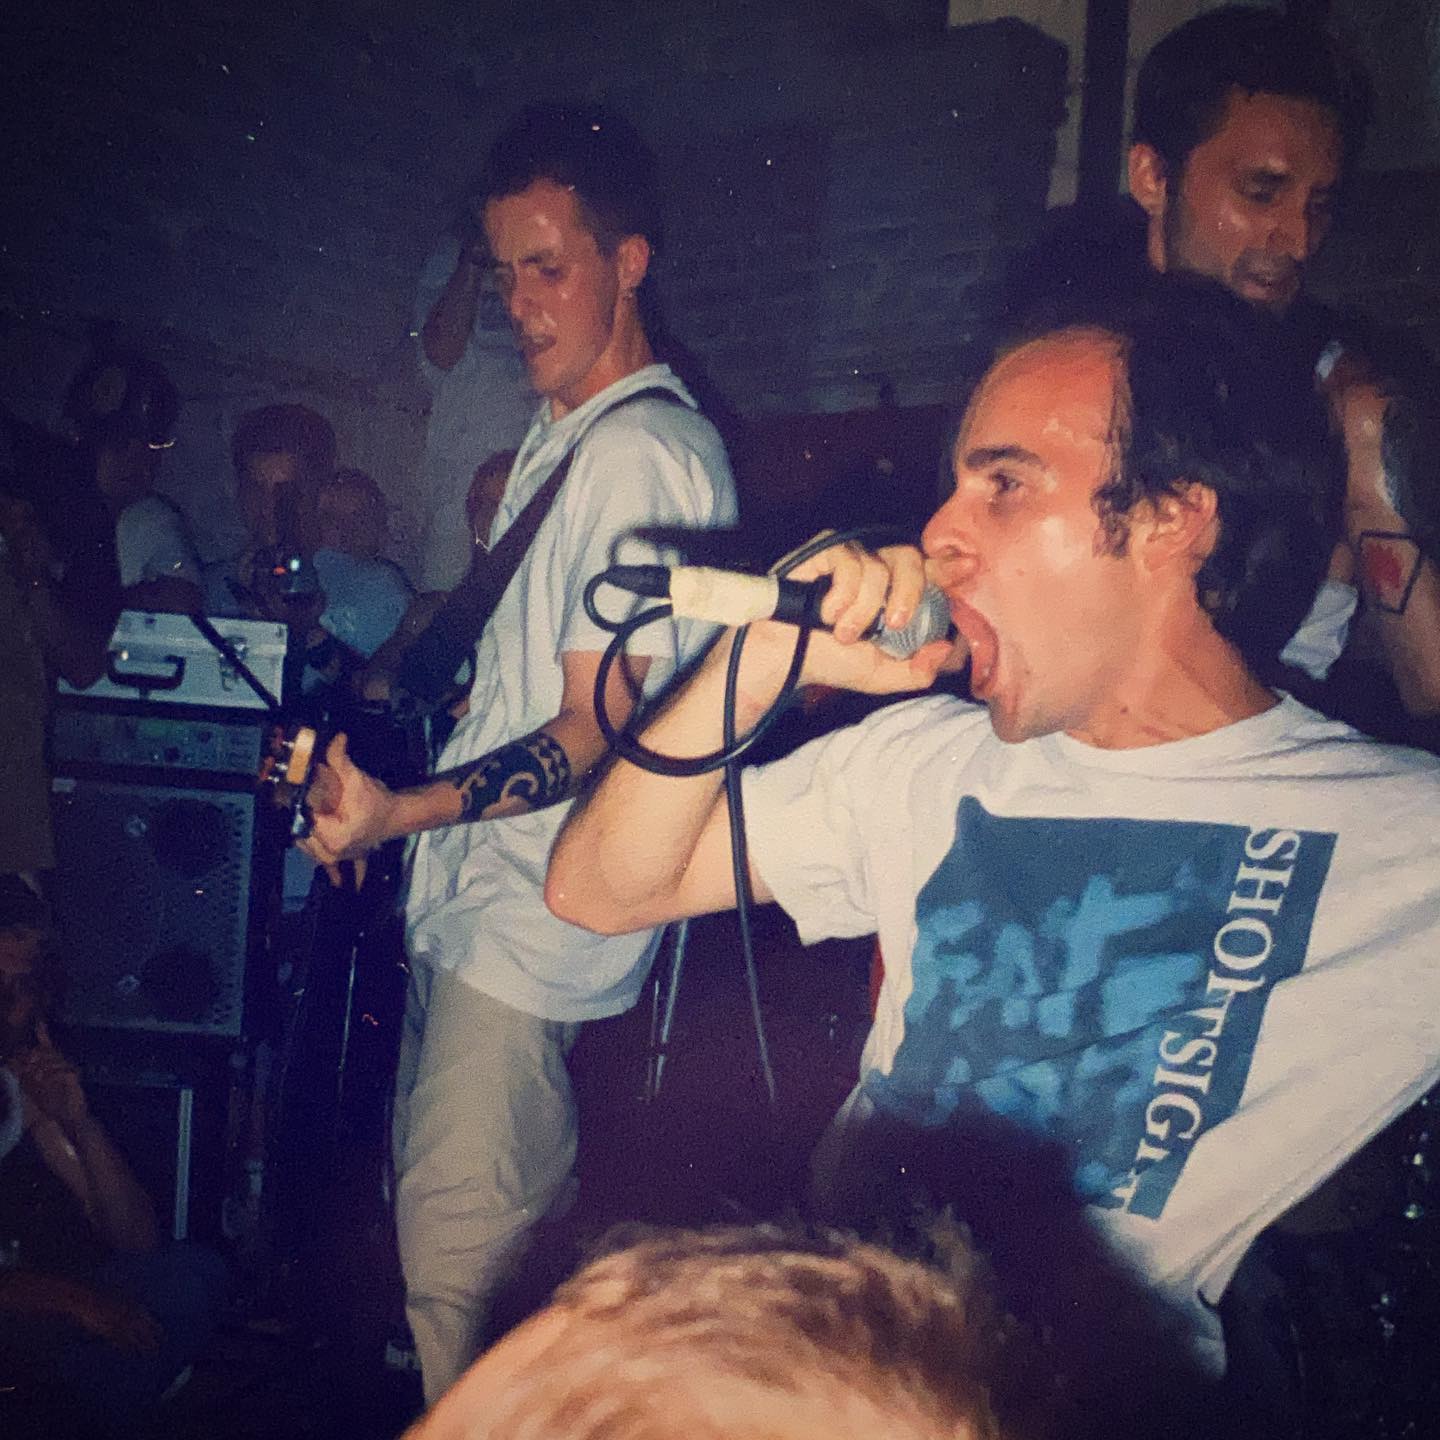 Blindfold - Hardcore Festival at Vort ’n Vis Ieper (B) - 15/16/17 August 1997 #straightedge #hardcore @goodliferecords pic by @twentylandcrew